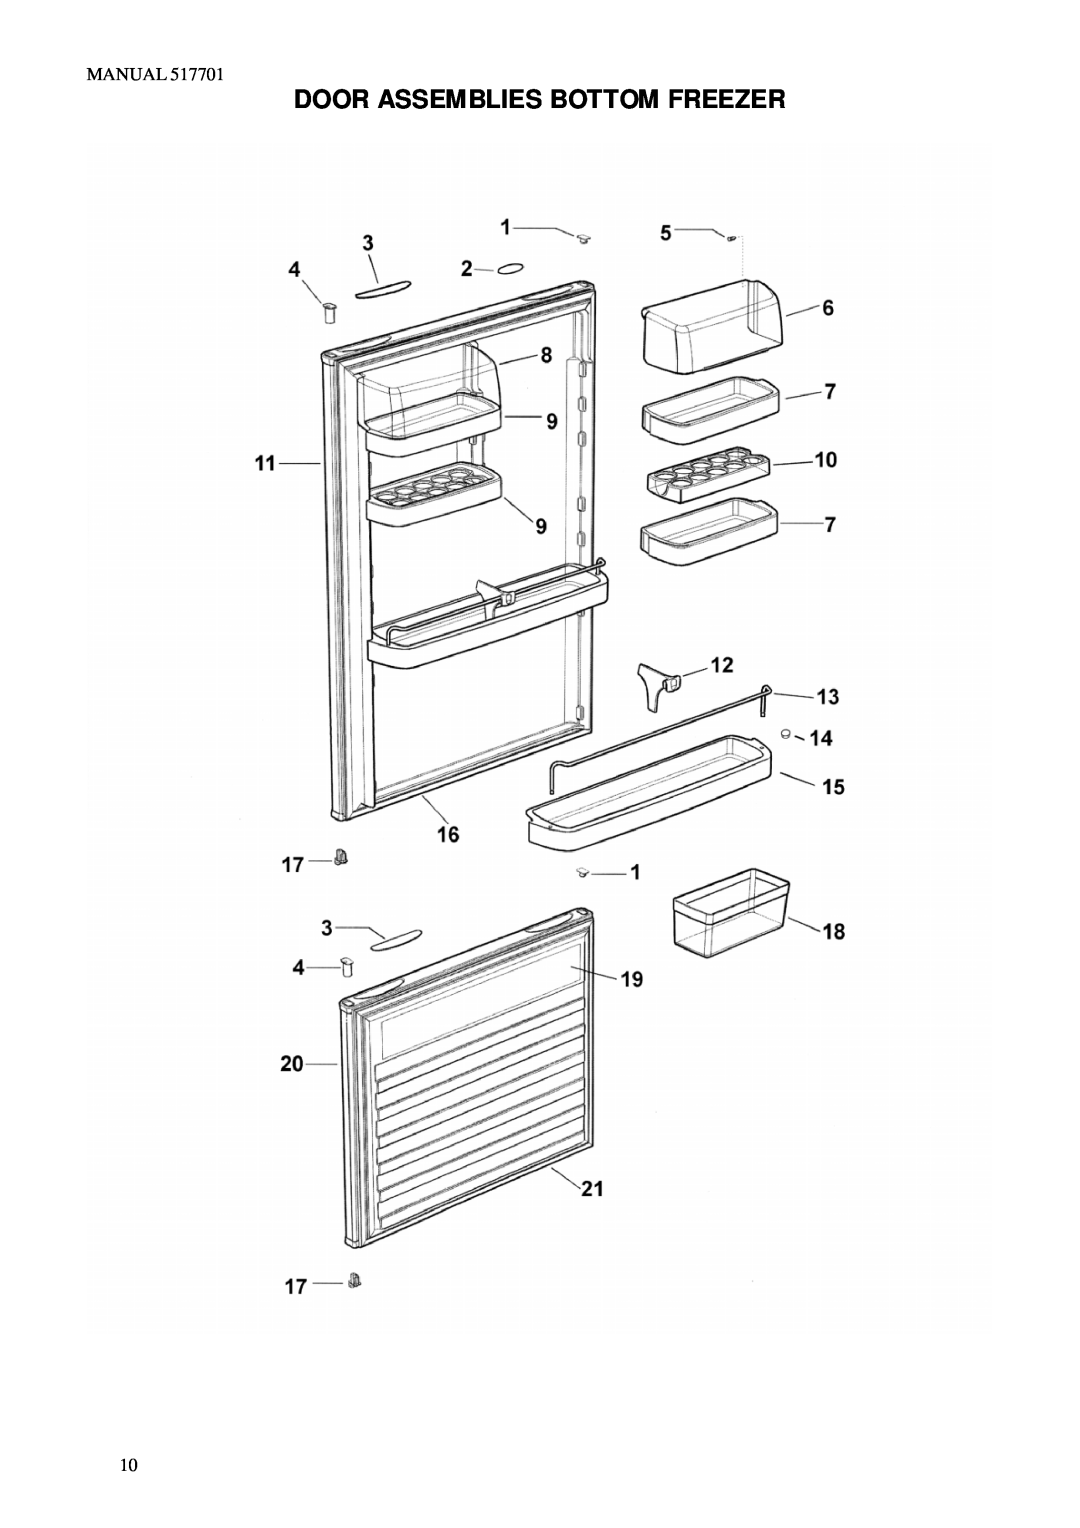 LG Electronics E442B, E16B, E440T, E16T manual Door Assemblies Bottom Freezer, Manual 